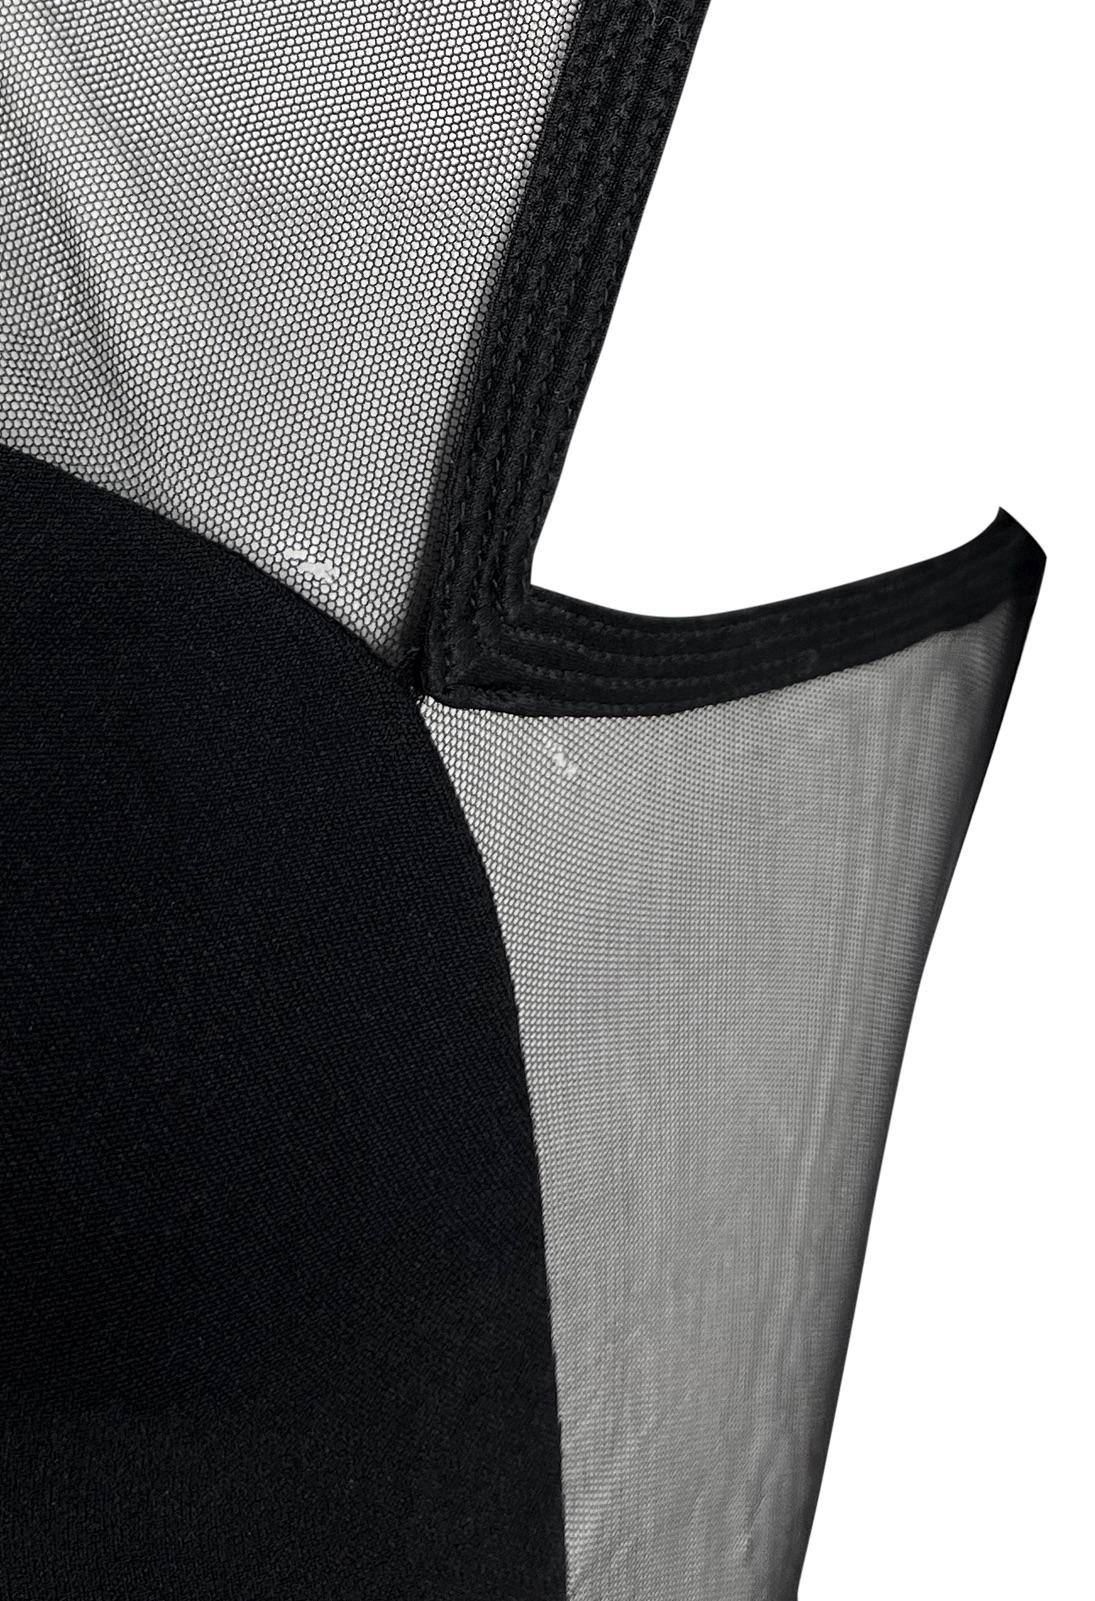 S/S 1996 Gianni Versace Black Sheer Panel Sleeveless Mesh Bodycon Dress For Sale 3